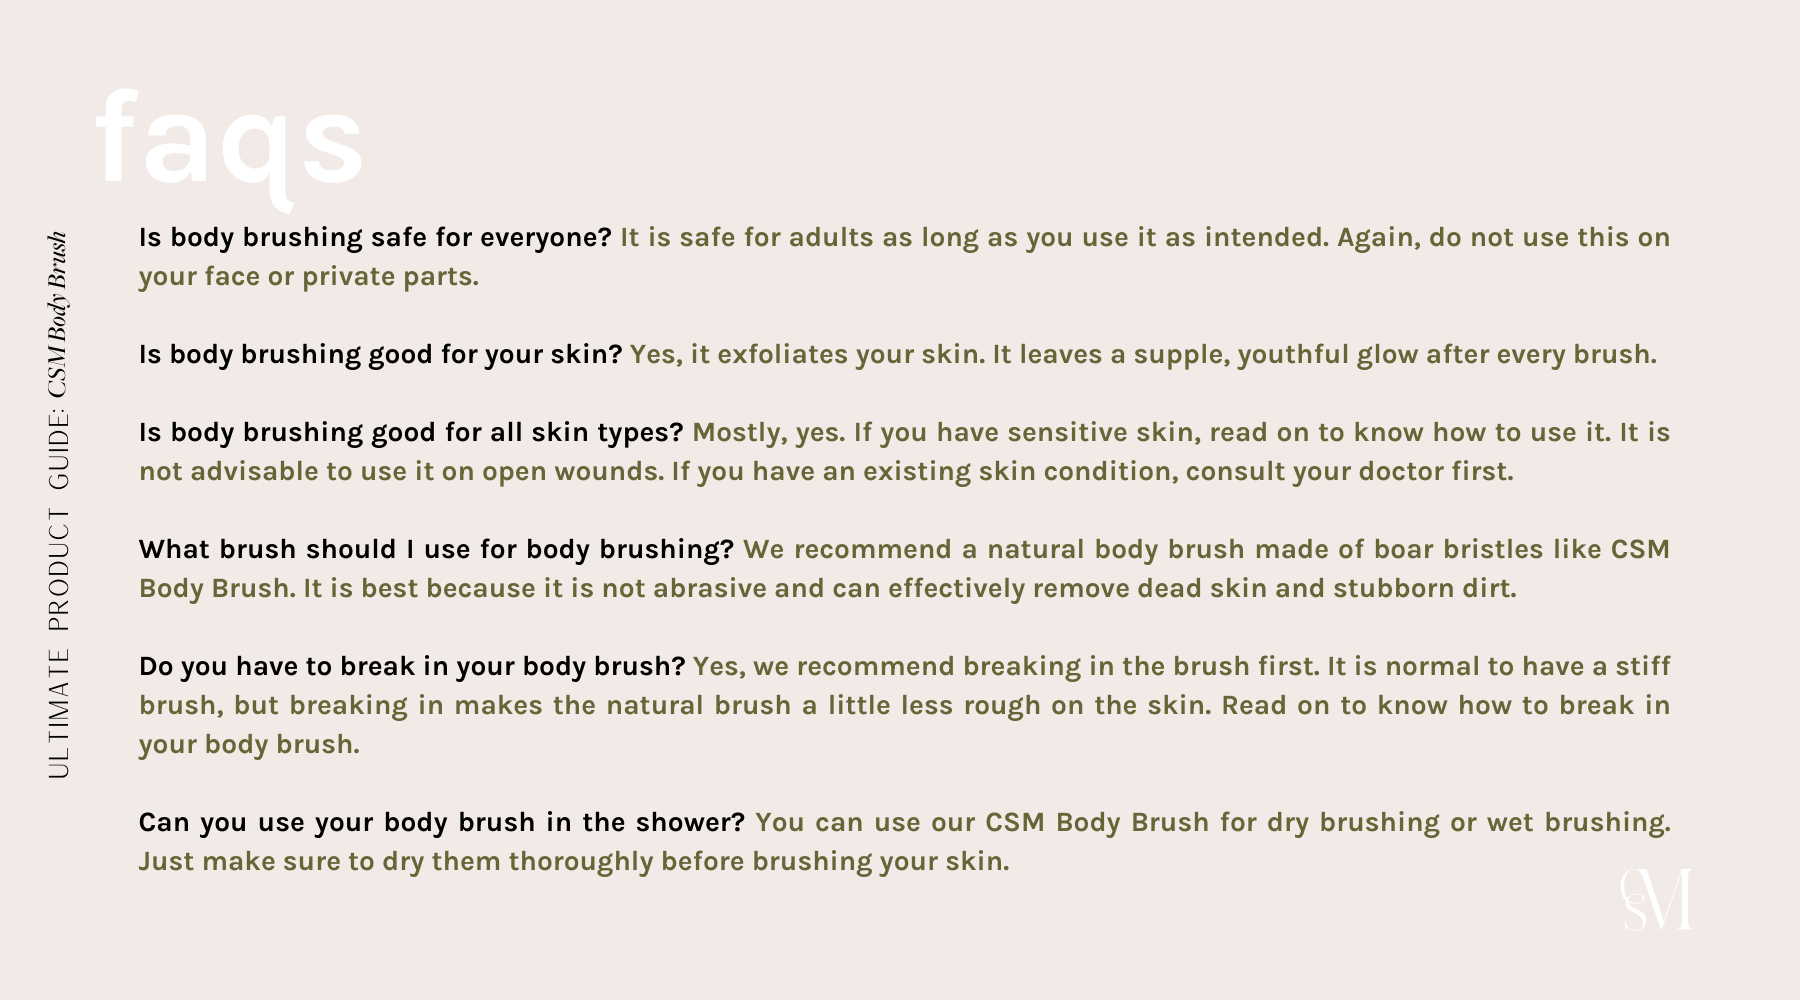 Common FAQs on Body Brushing. 